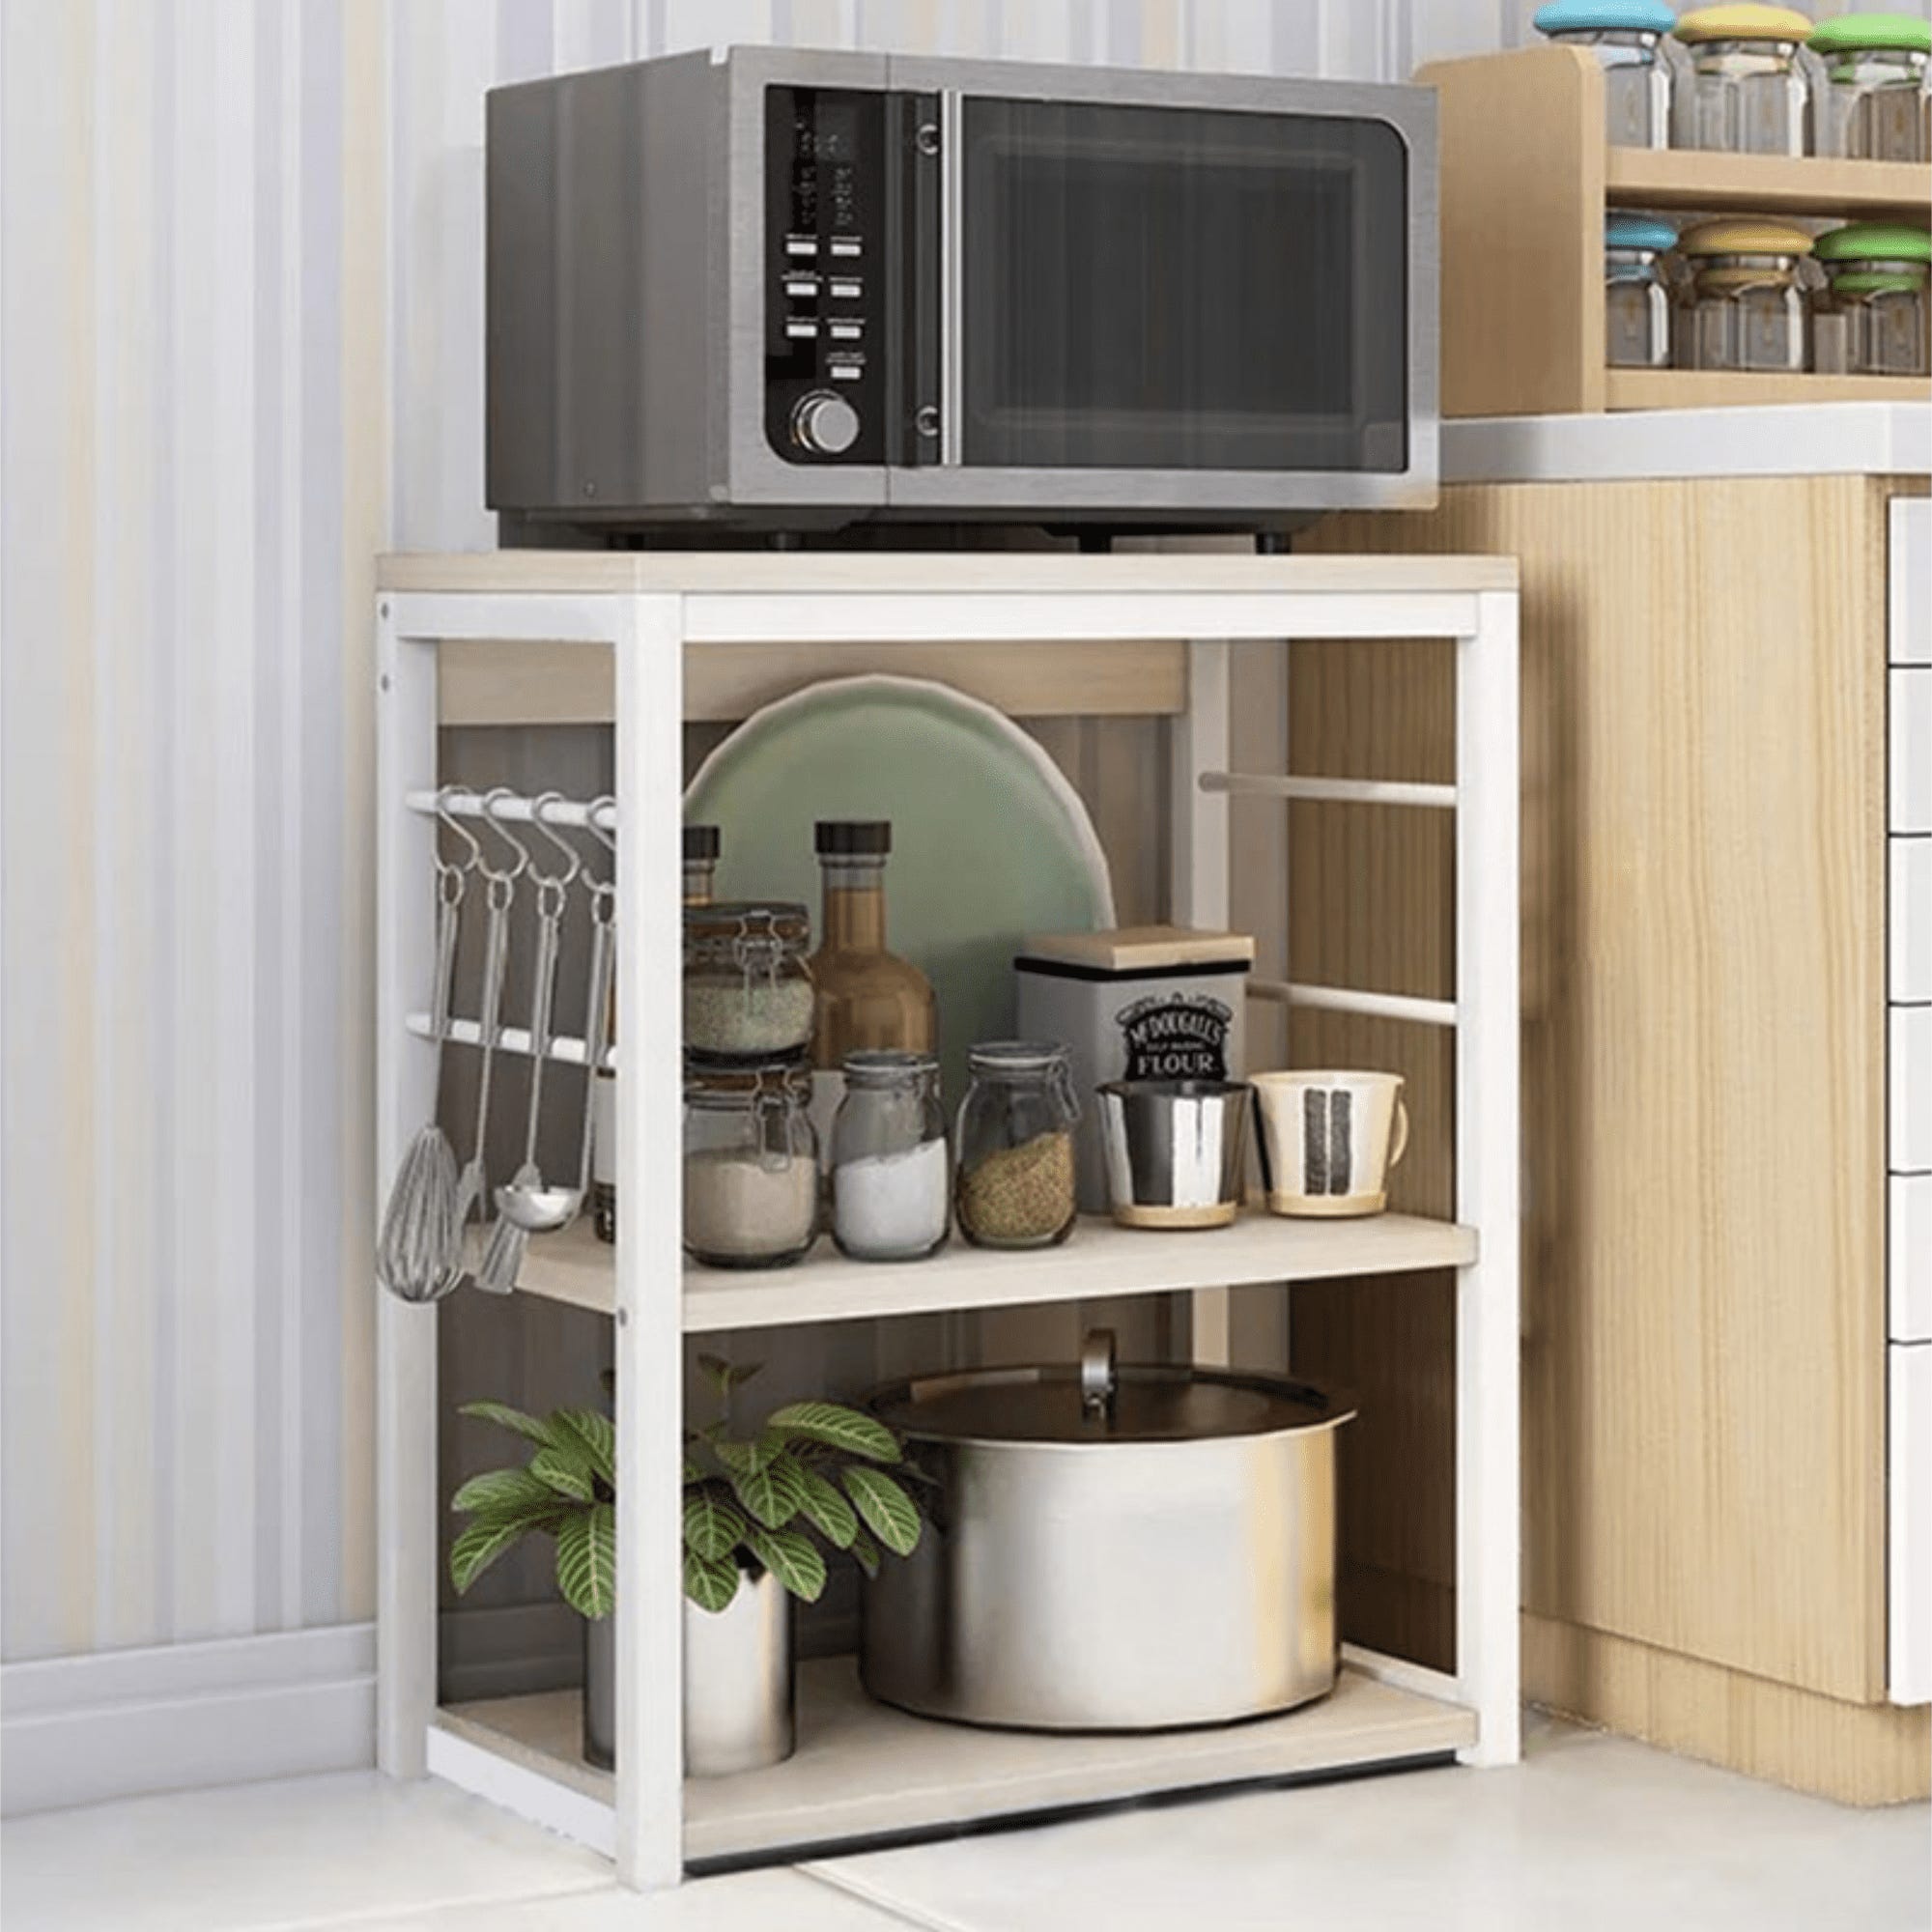 Mueble de cocina para microondas 4 estantes, color roble/negro ÁFRICA